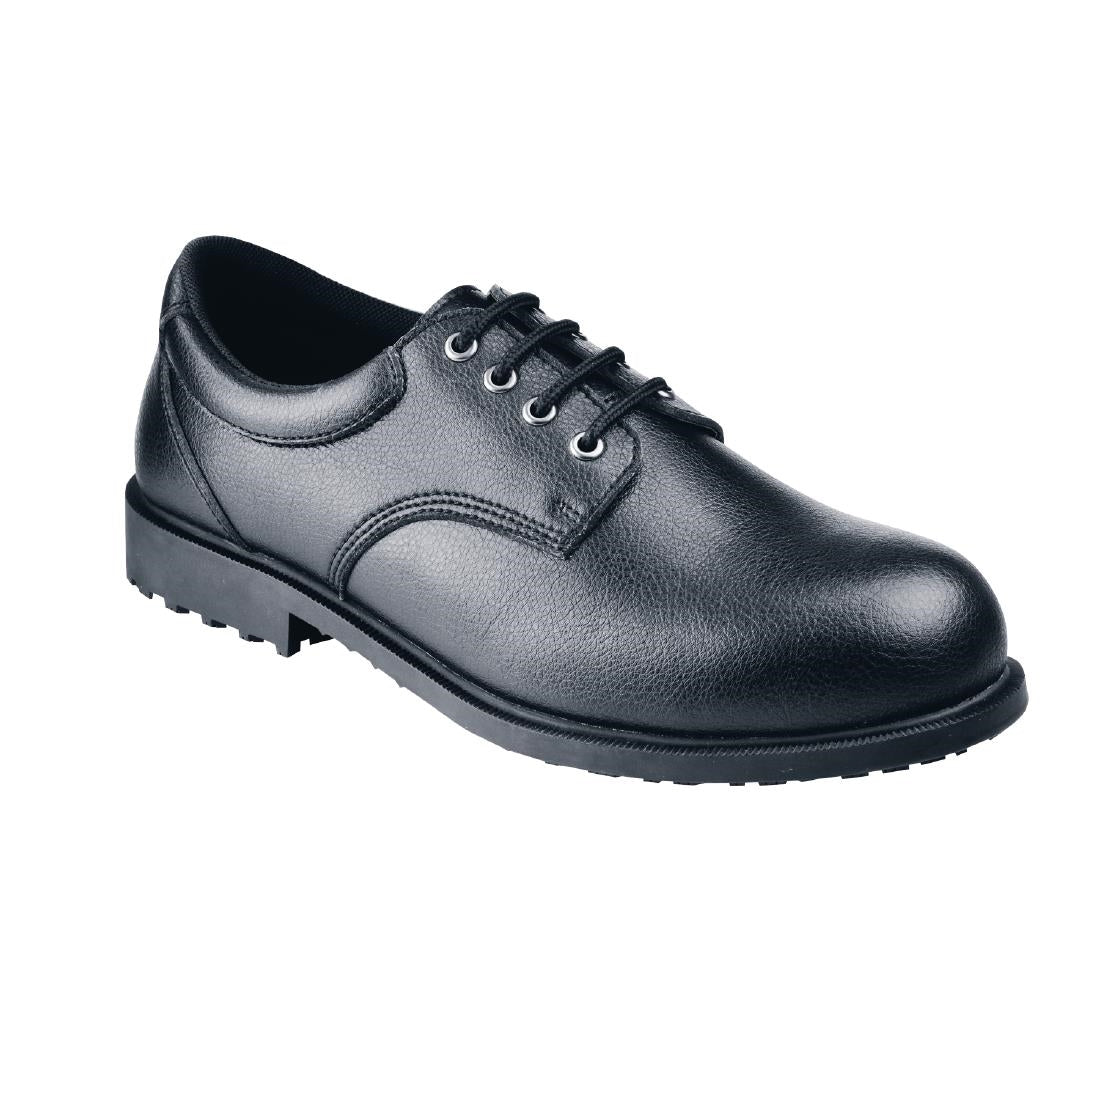 BB611-39 Shoes for Crews Cambridge Steel Toe Dress Shoe Size 39